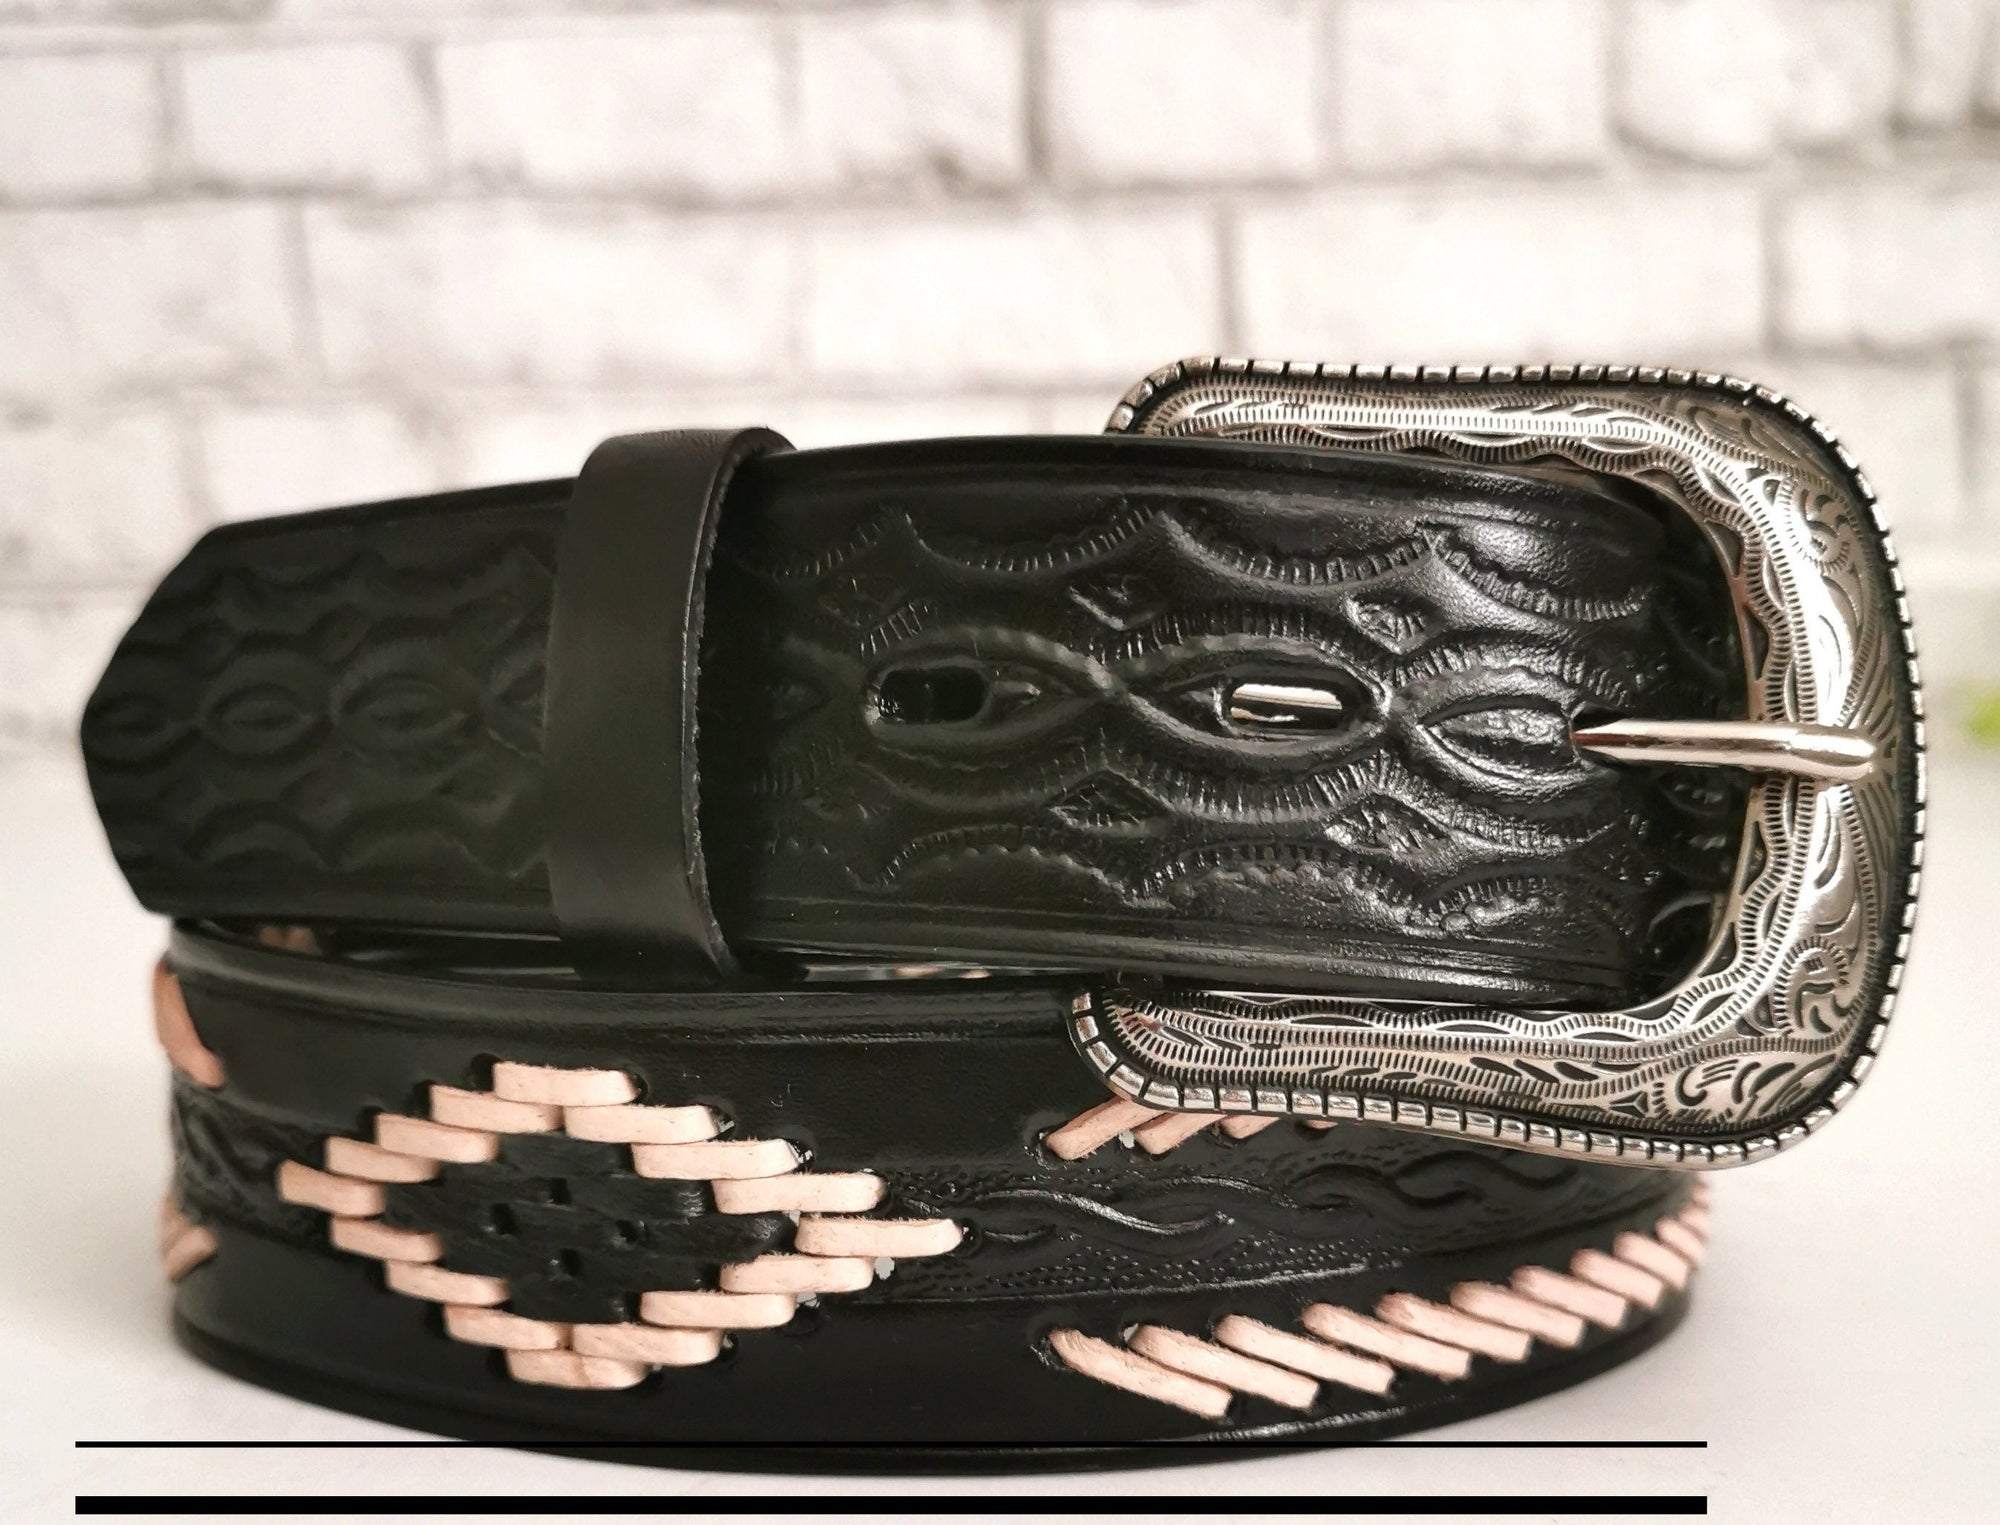 western leather belt